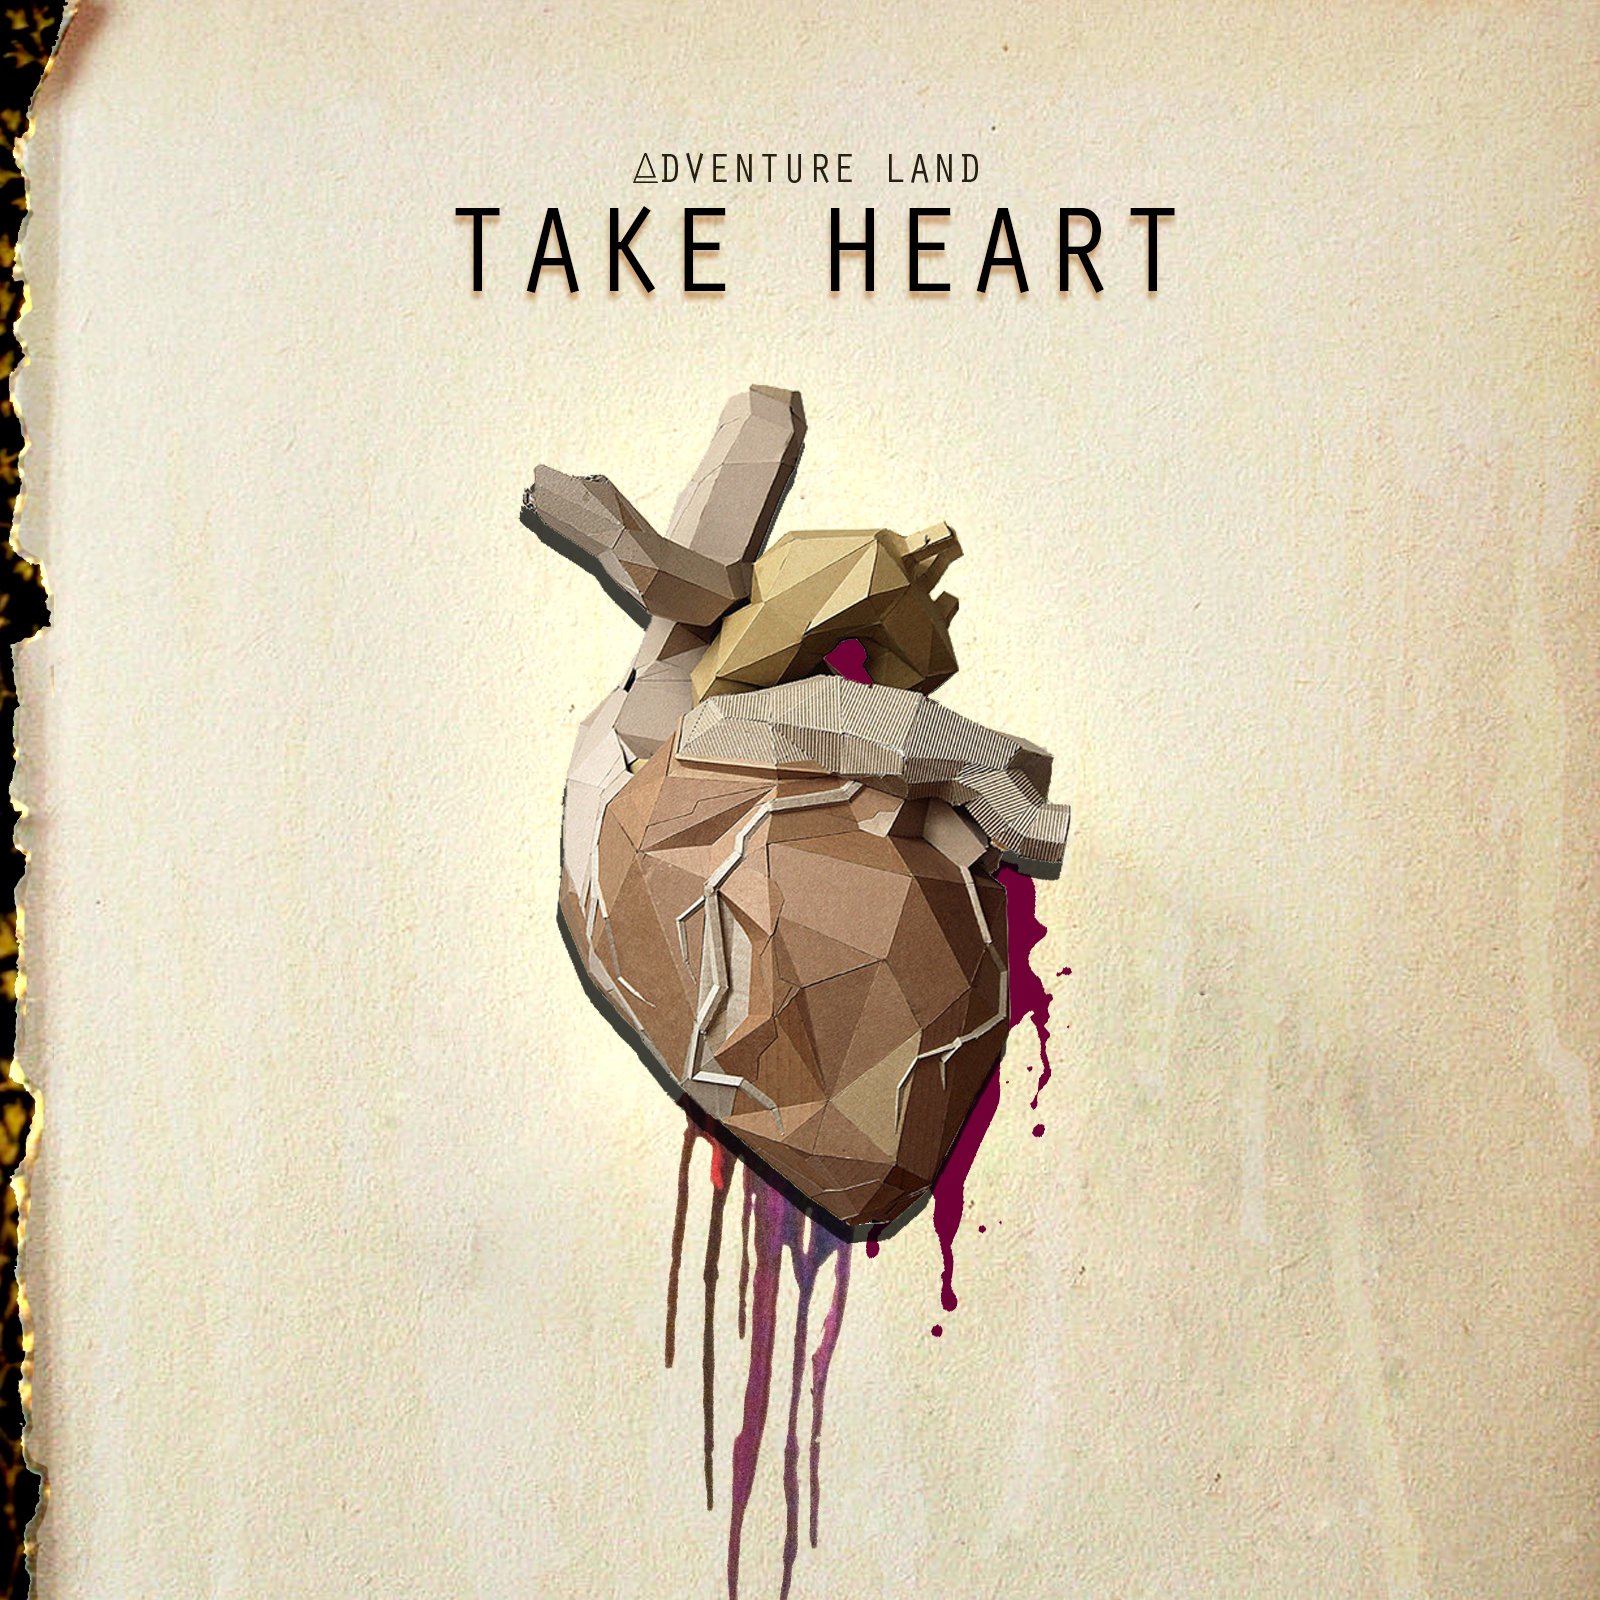 Take my heard. Heart обложка. Take Heart. Заяц take my Heart. Открытка take my Heart.